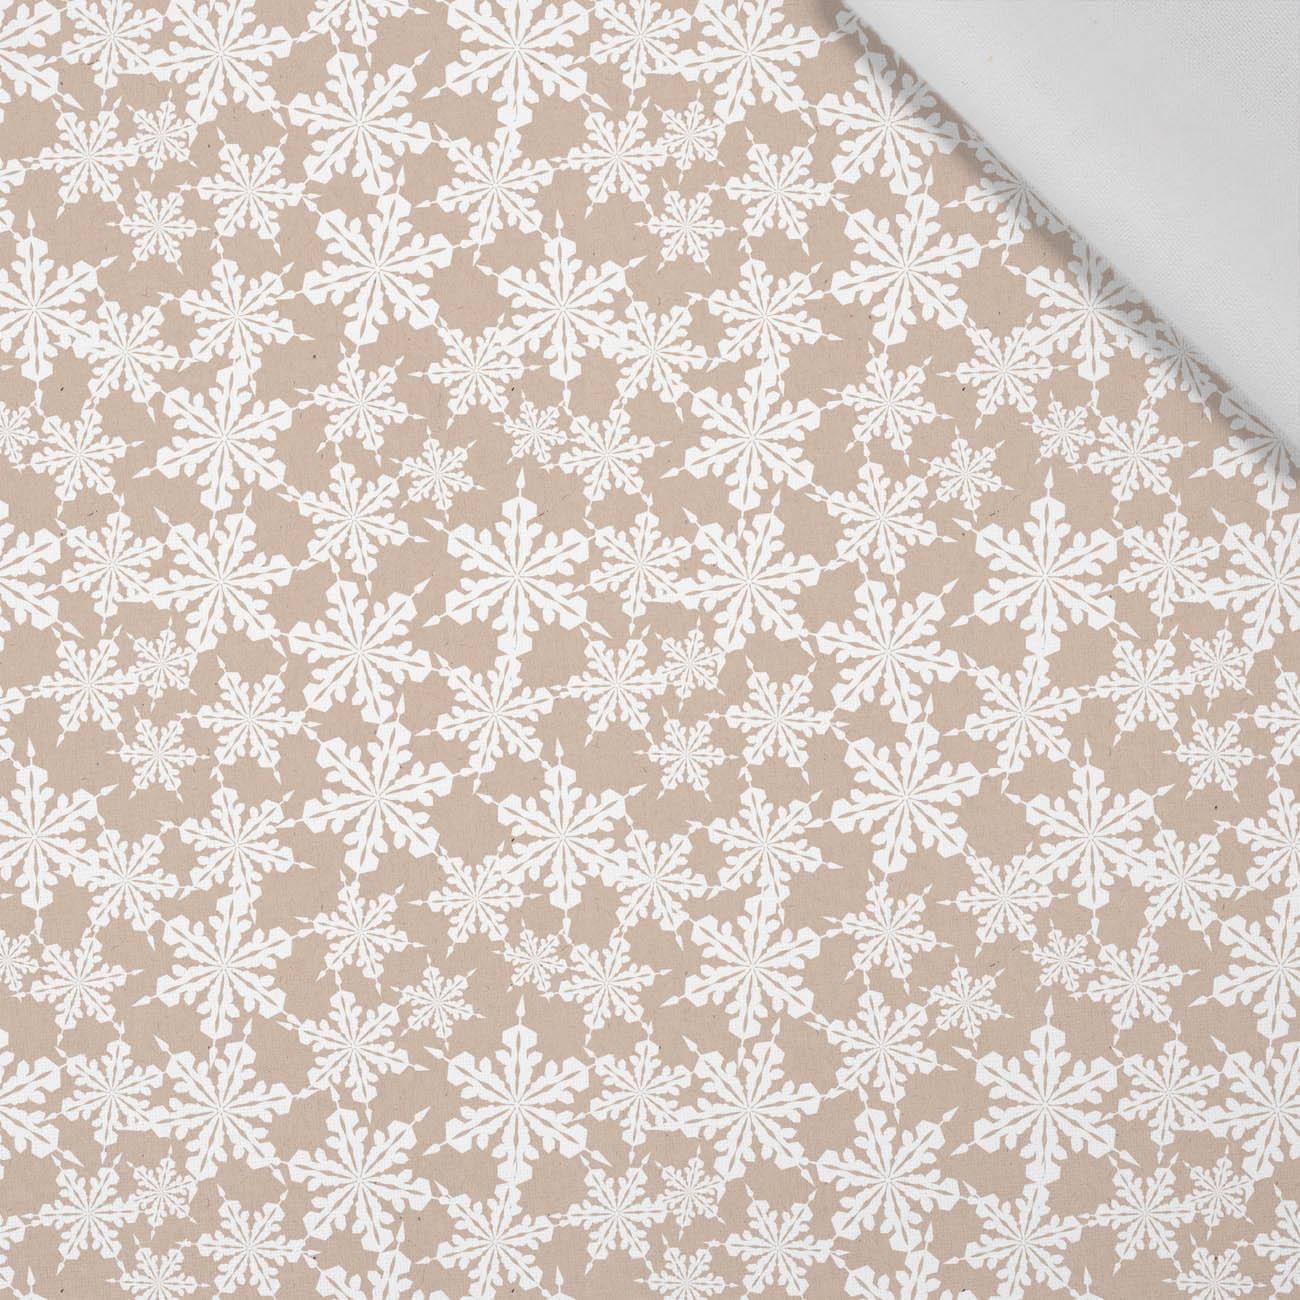 PAPER SNOWFLAKES (WHITE CHRISTMAS) - Cotton woven fabric